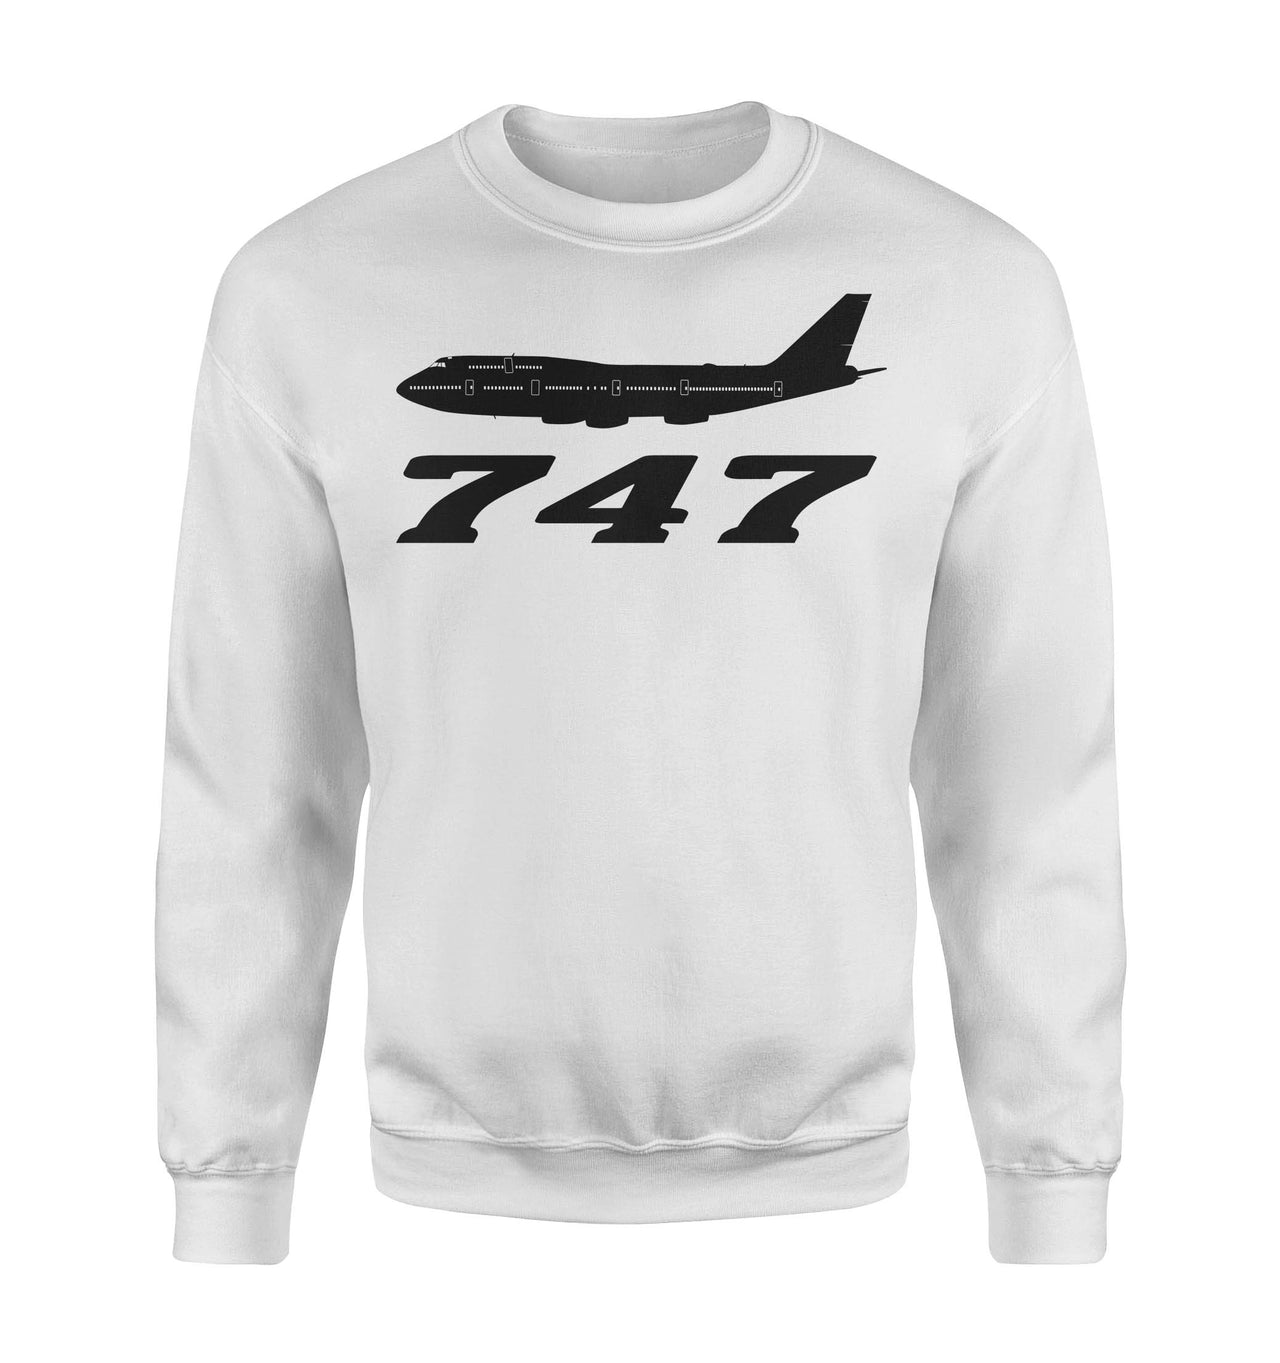 Special The Boeing 747 Design Designed Sweatshirts